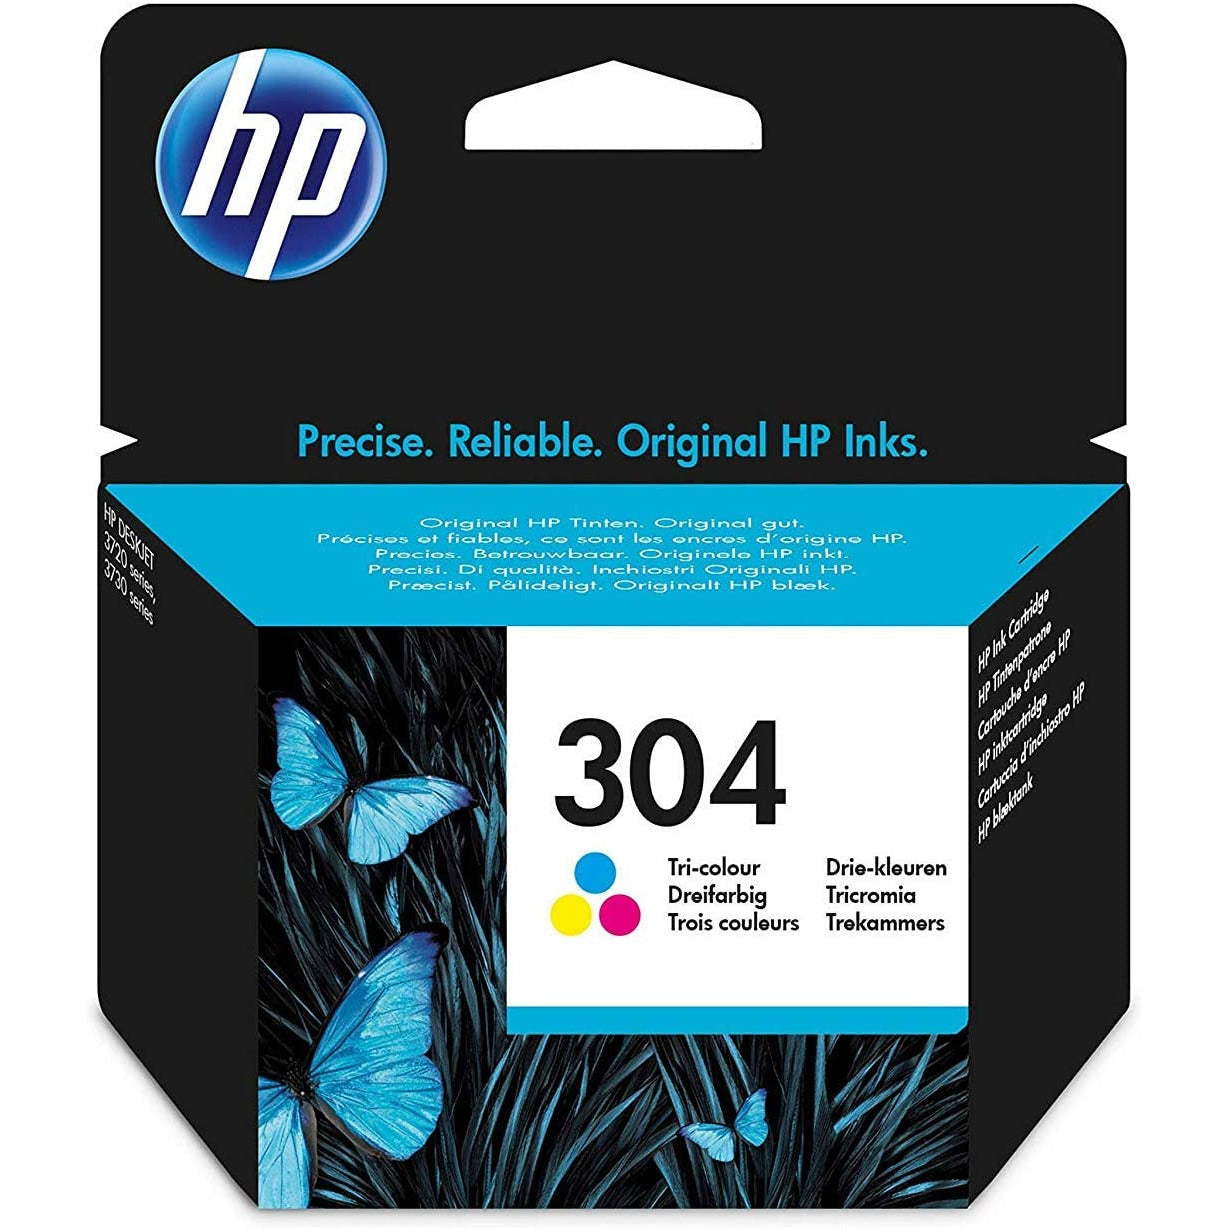 HP 304 colour ink cartridge